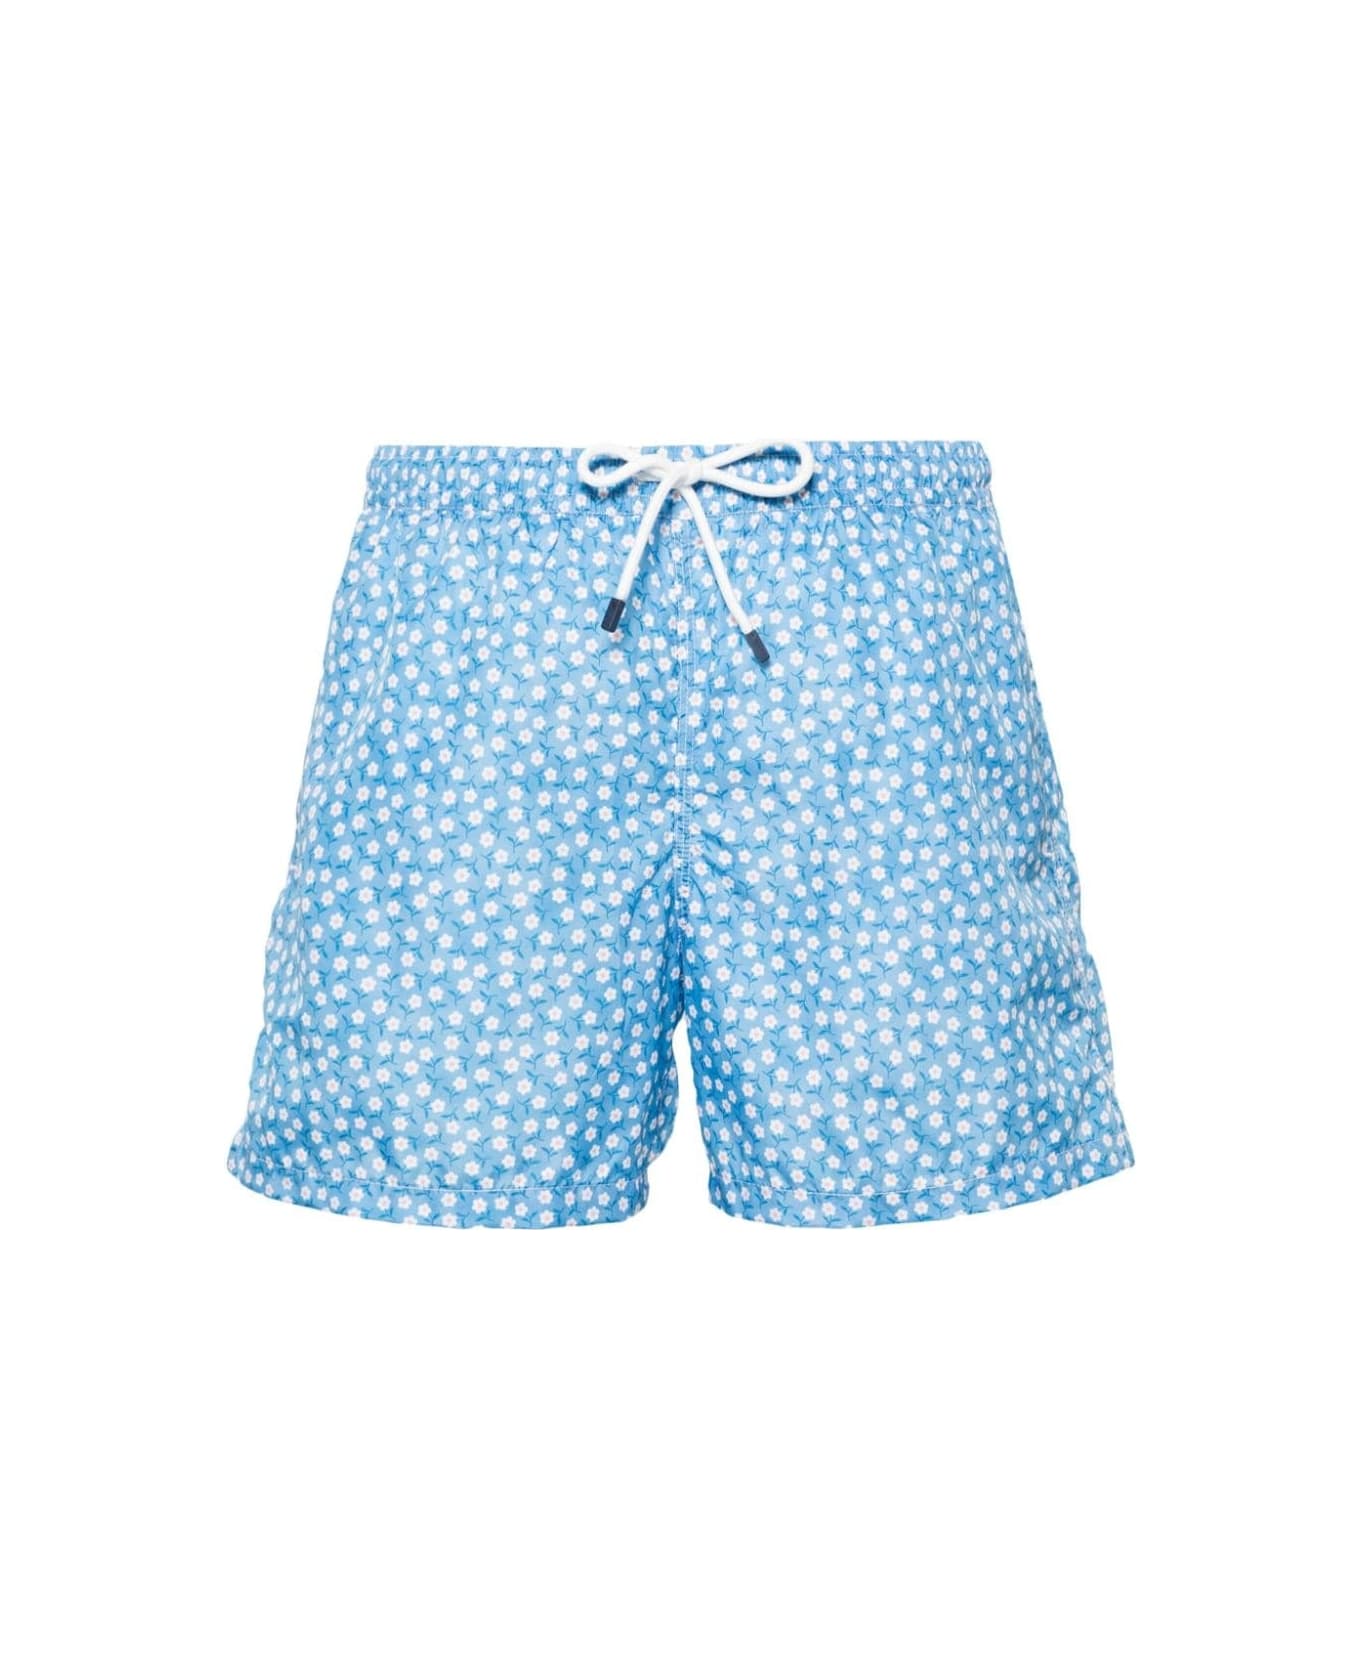 Fedeli Light Blue Swim Shorts With Micro Daisy Pattern - Blue スイムトランクス